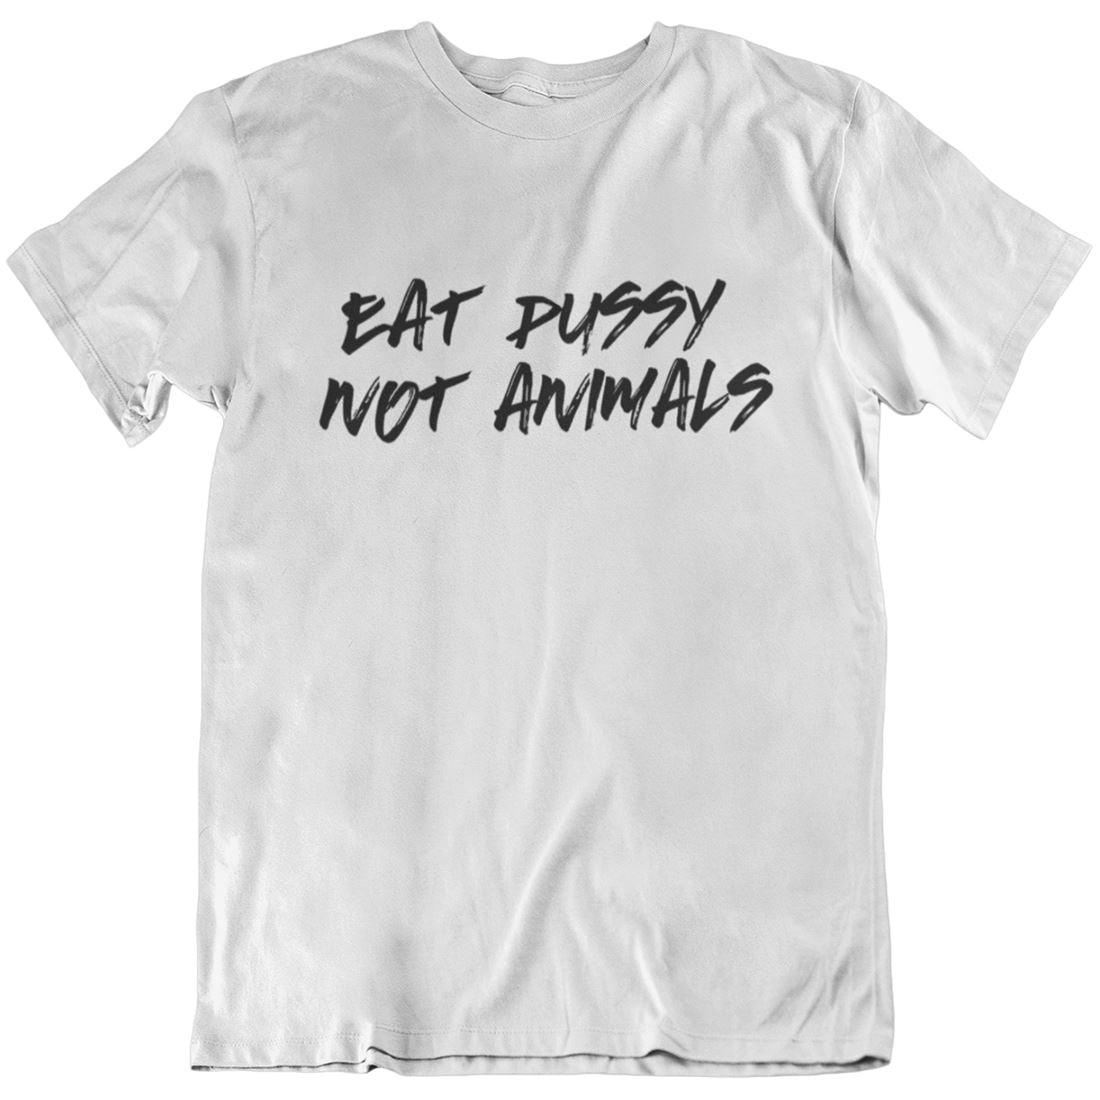 Eat pussy not animals - Unisex Organic Shirt - Team Vegan © vegan t shirt